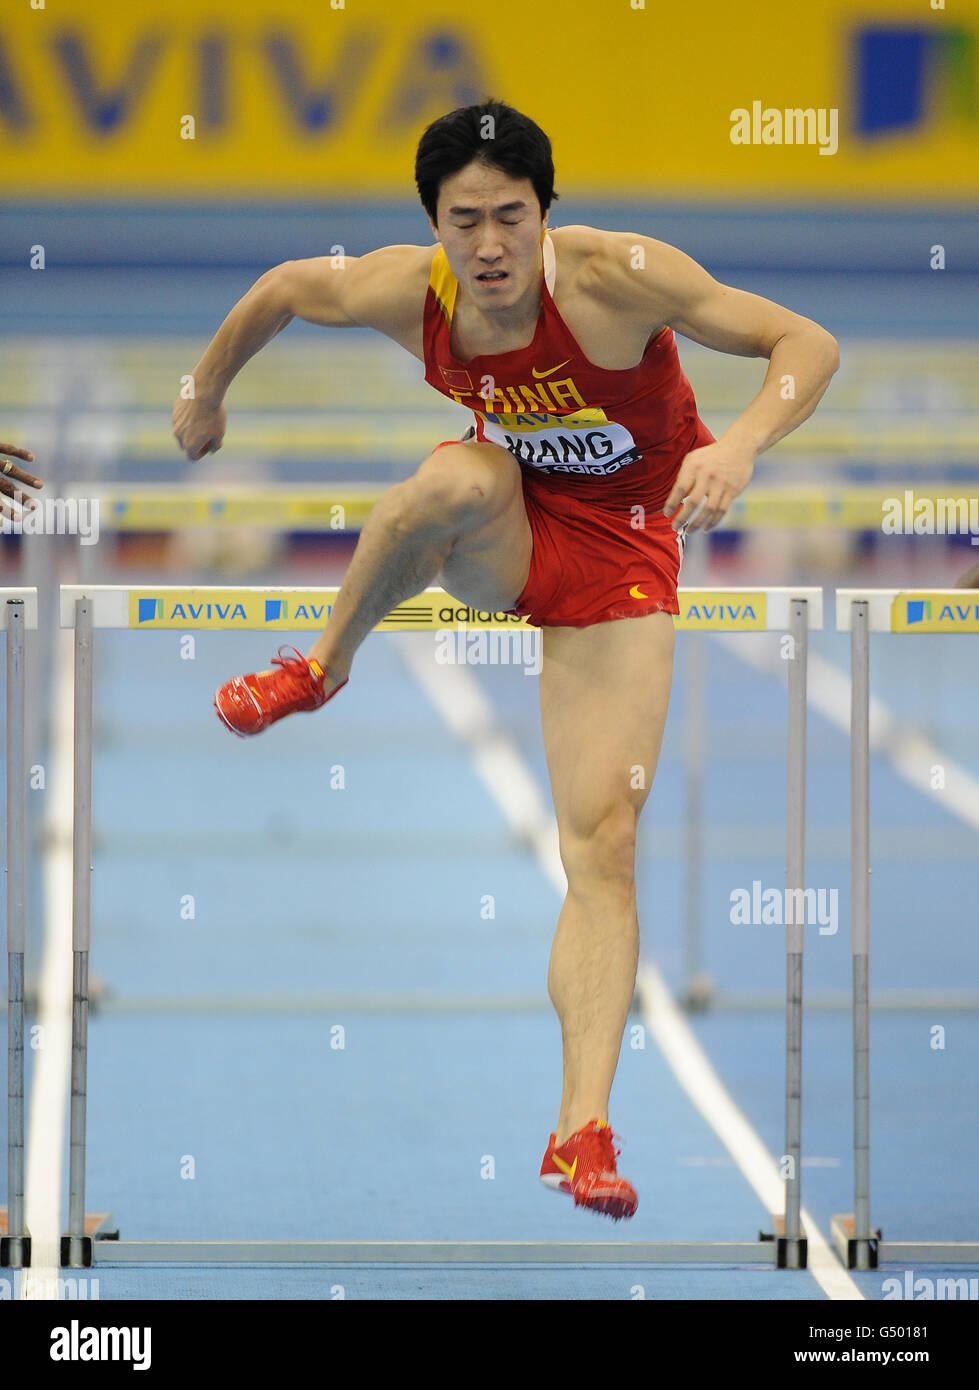 Leichtathletik - Aviva Grand Prix 2012 - National Indoor Arena Stockfoto